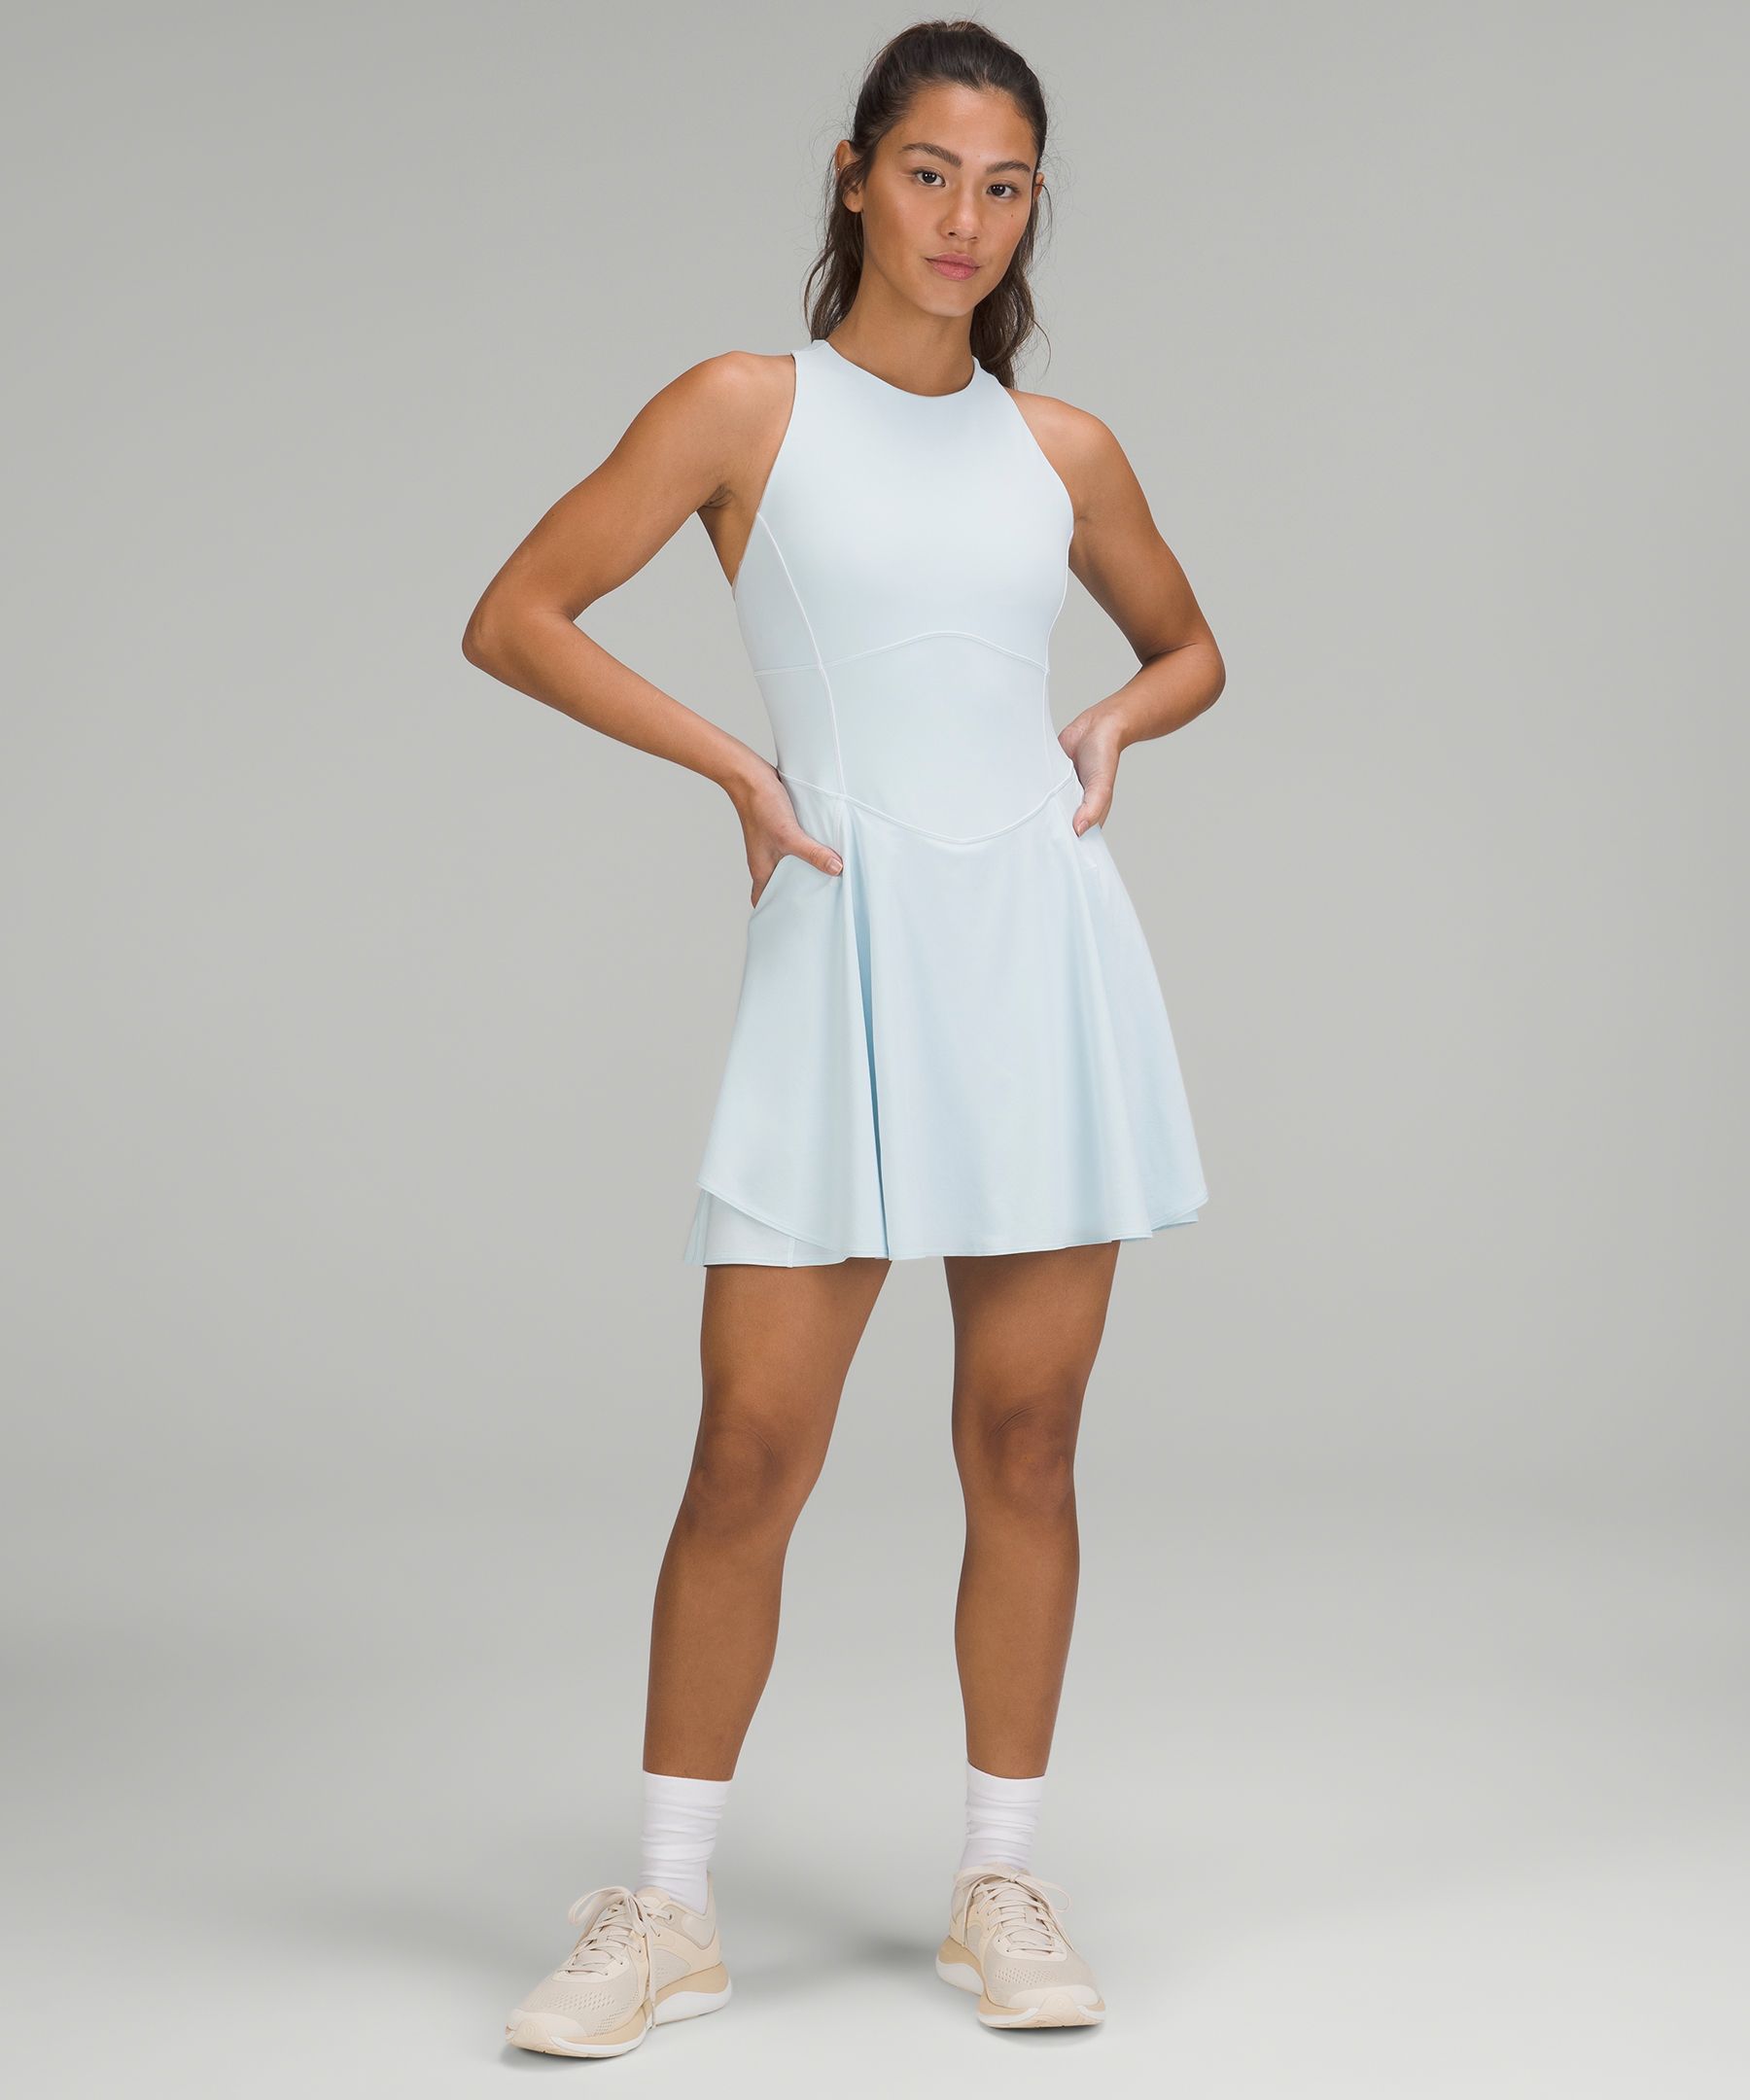 Lululemon Court Crush Tennis Dress